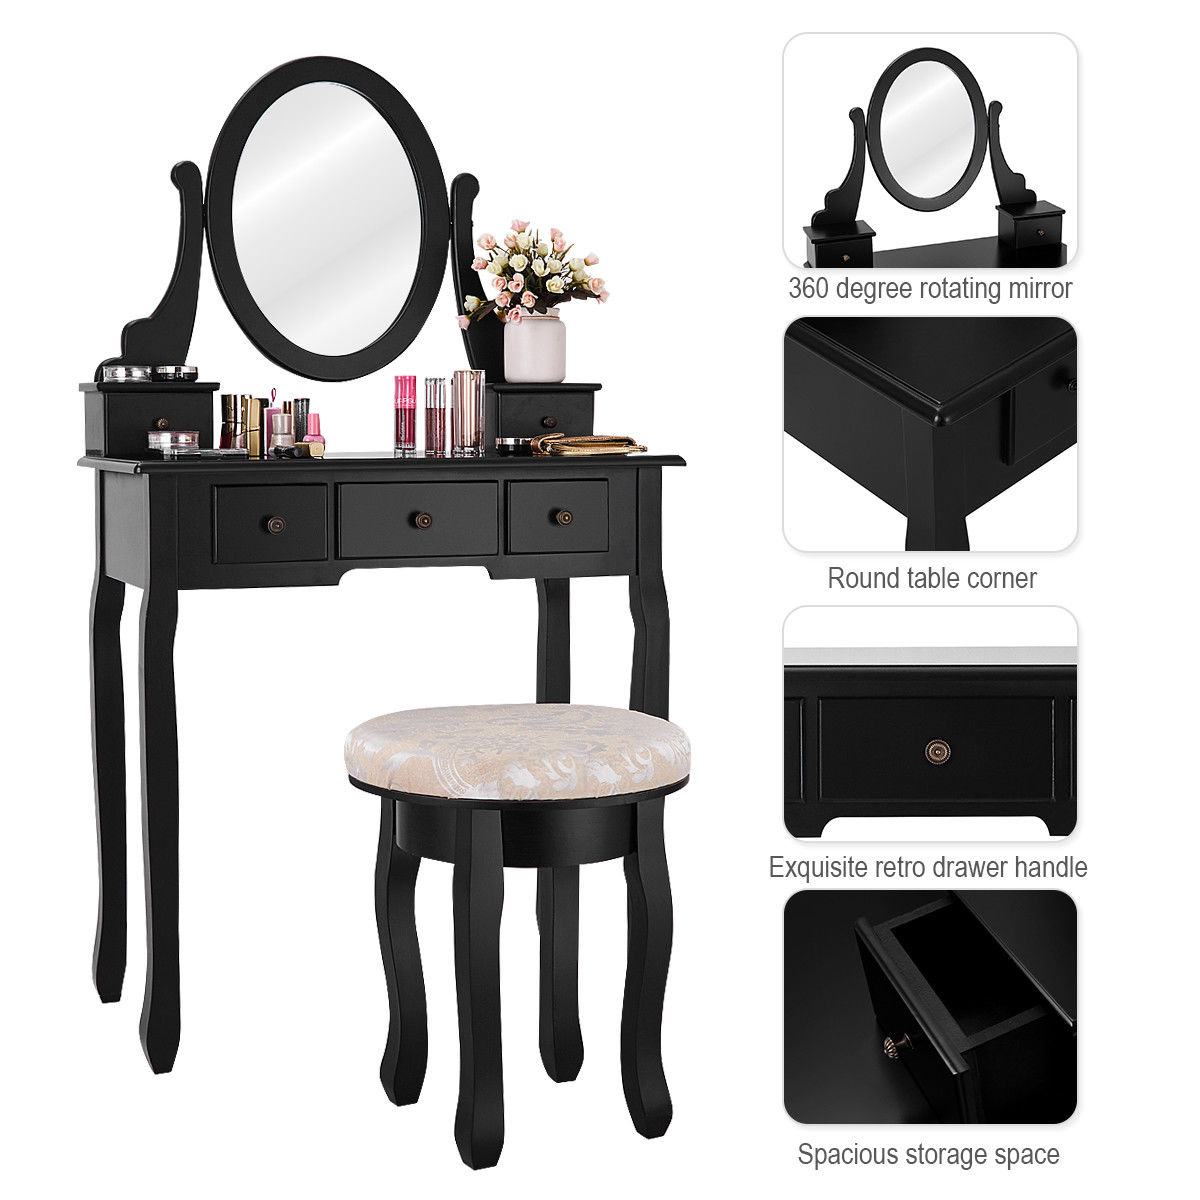 Black Makeup Table Vanity Table Set Cushioned Stool Mirror 5 Drawers